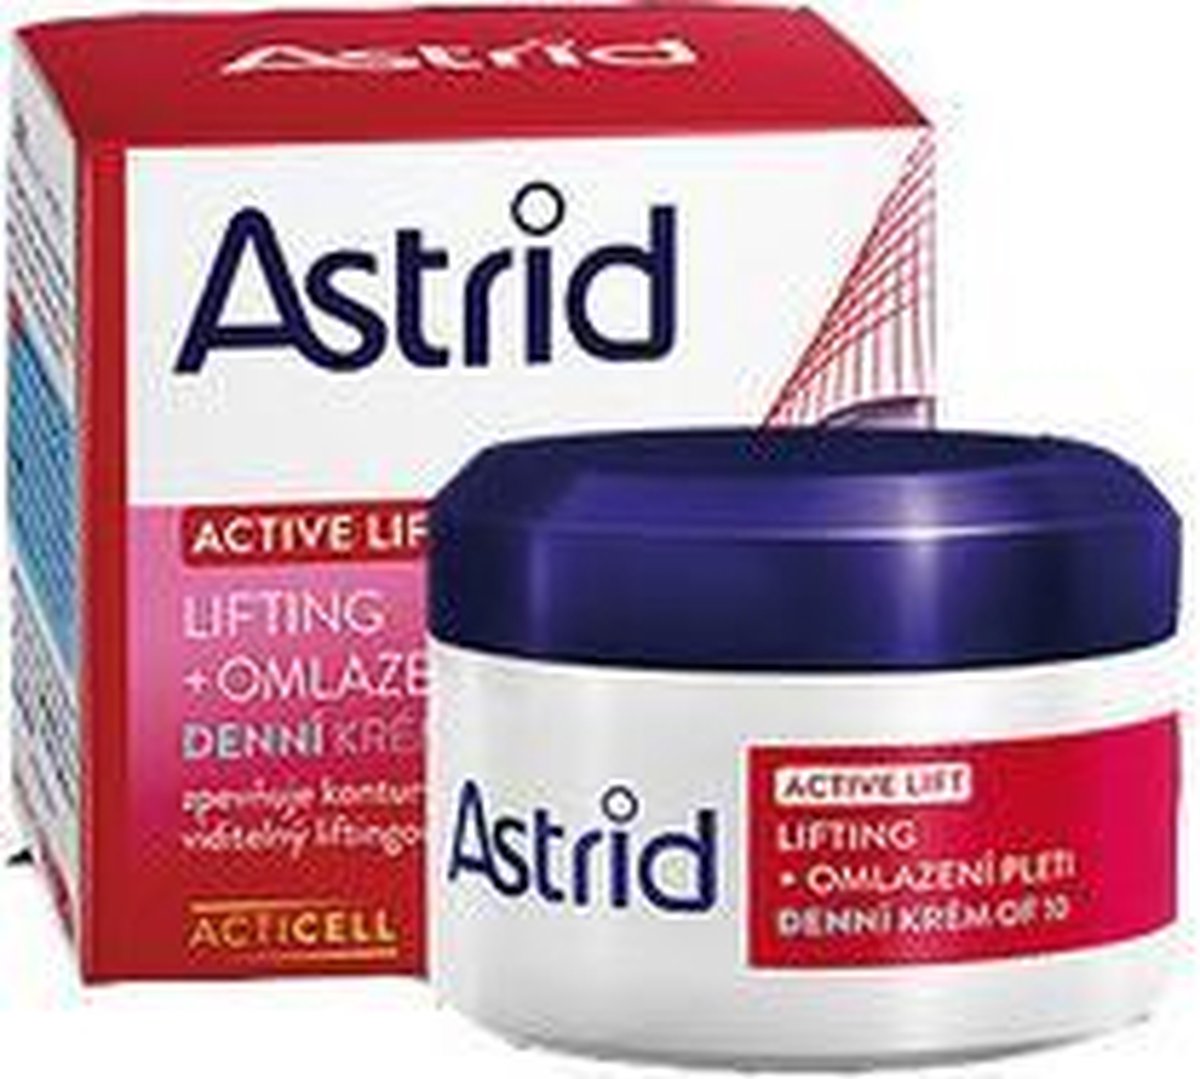 Astrid - Active Lift Lifting Rejuvenating Day Cream SPF 10 - 50ml